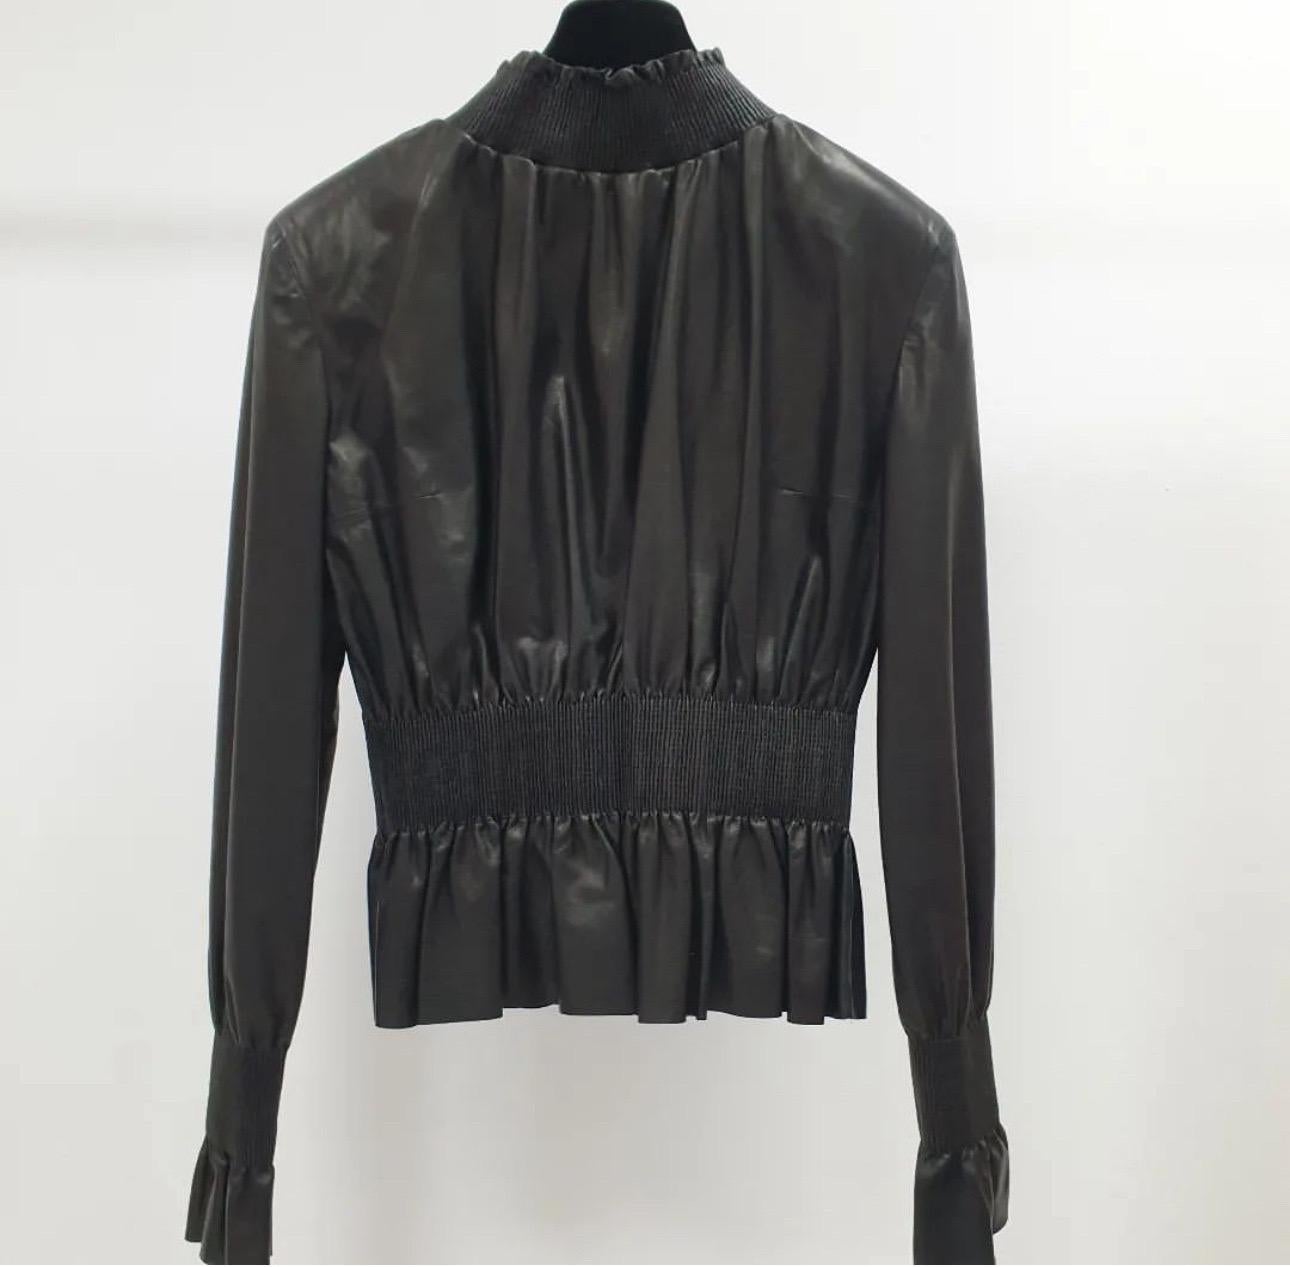 Tom Ford Black Leather Jacket Skirt Suit For Sale 1